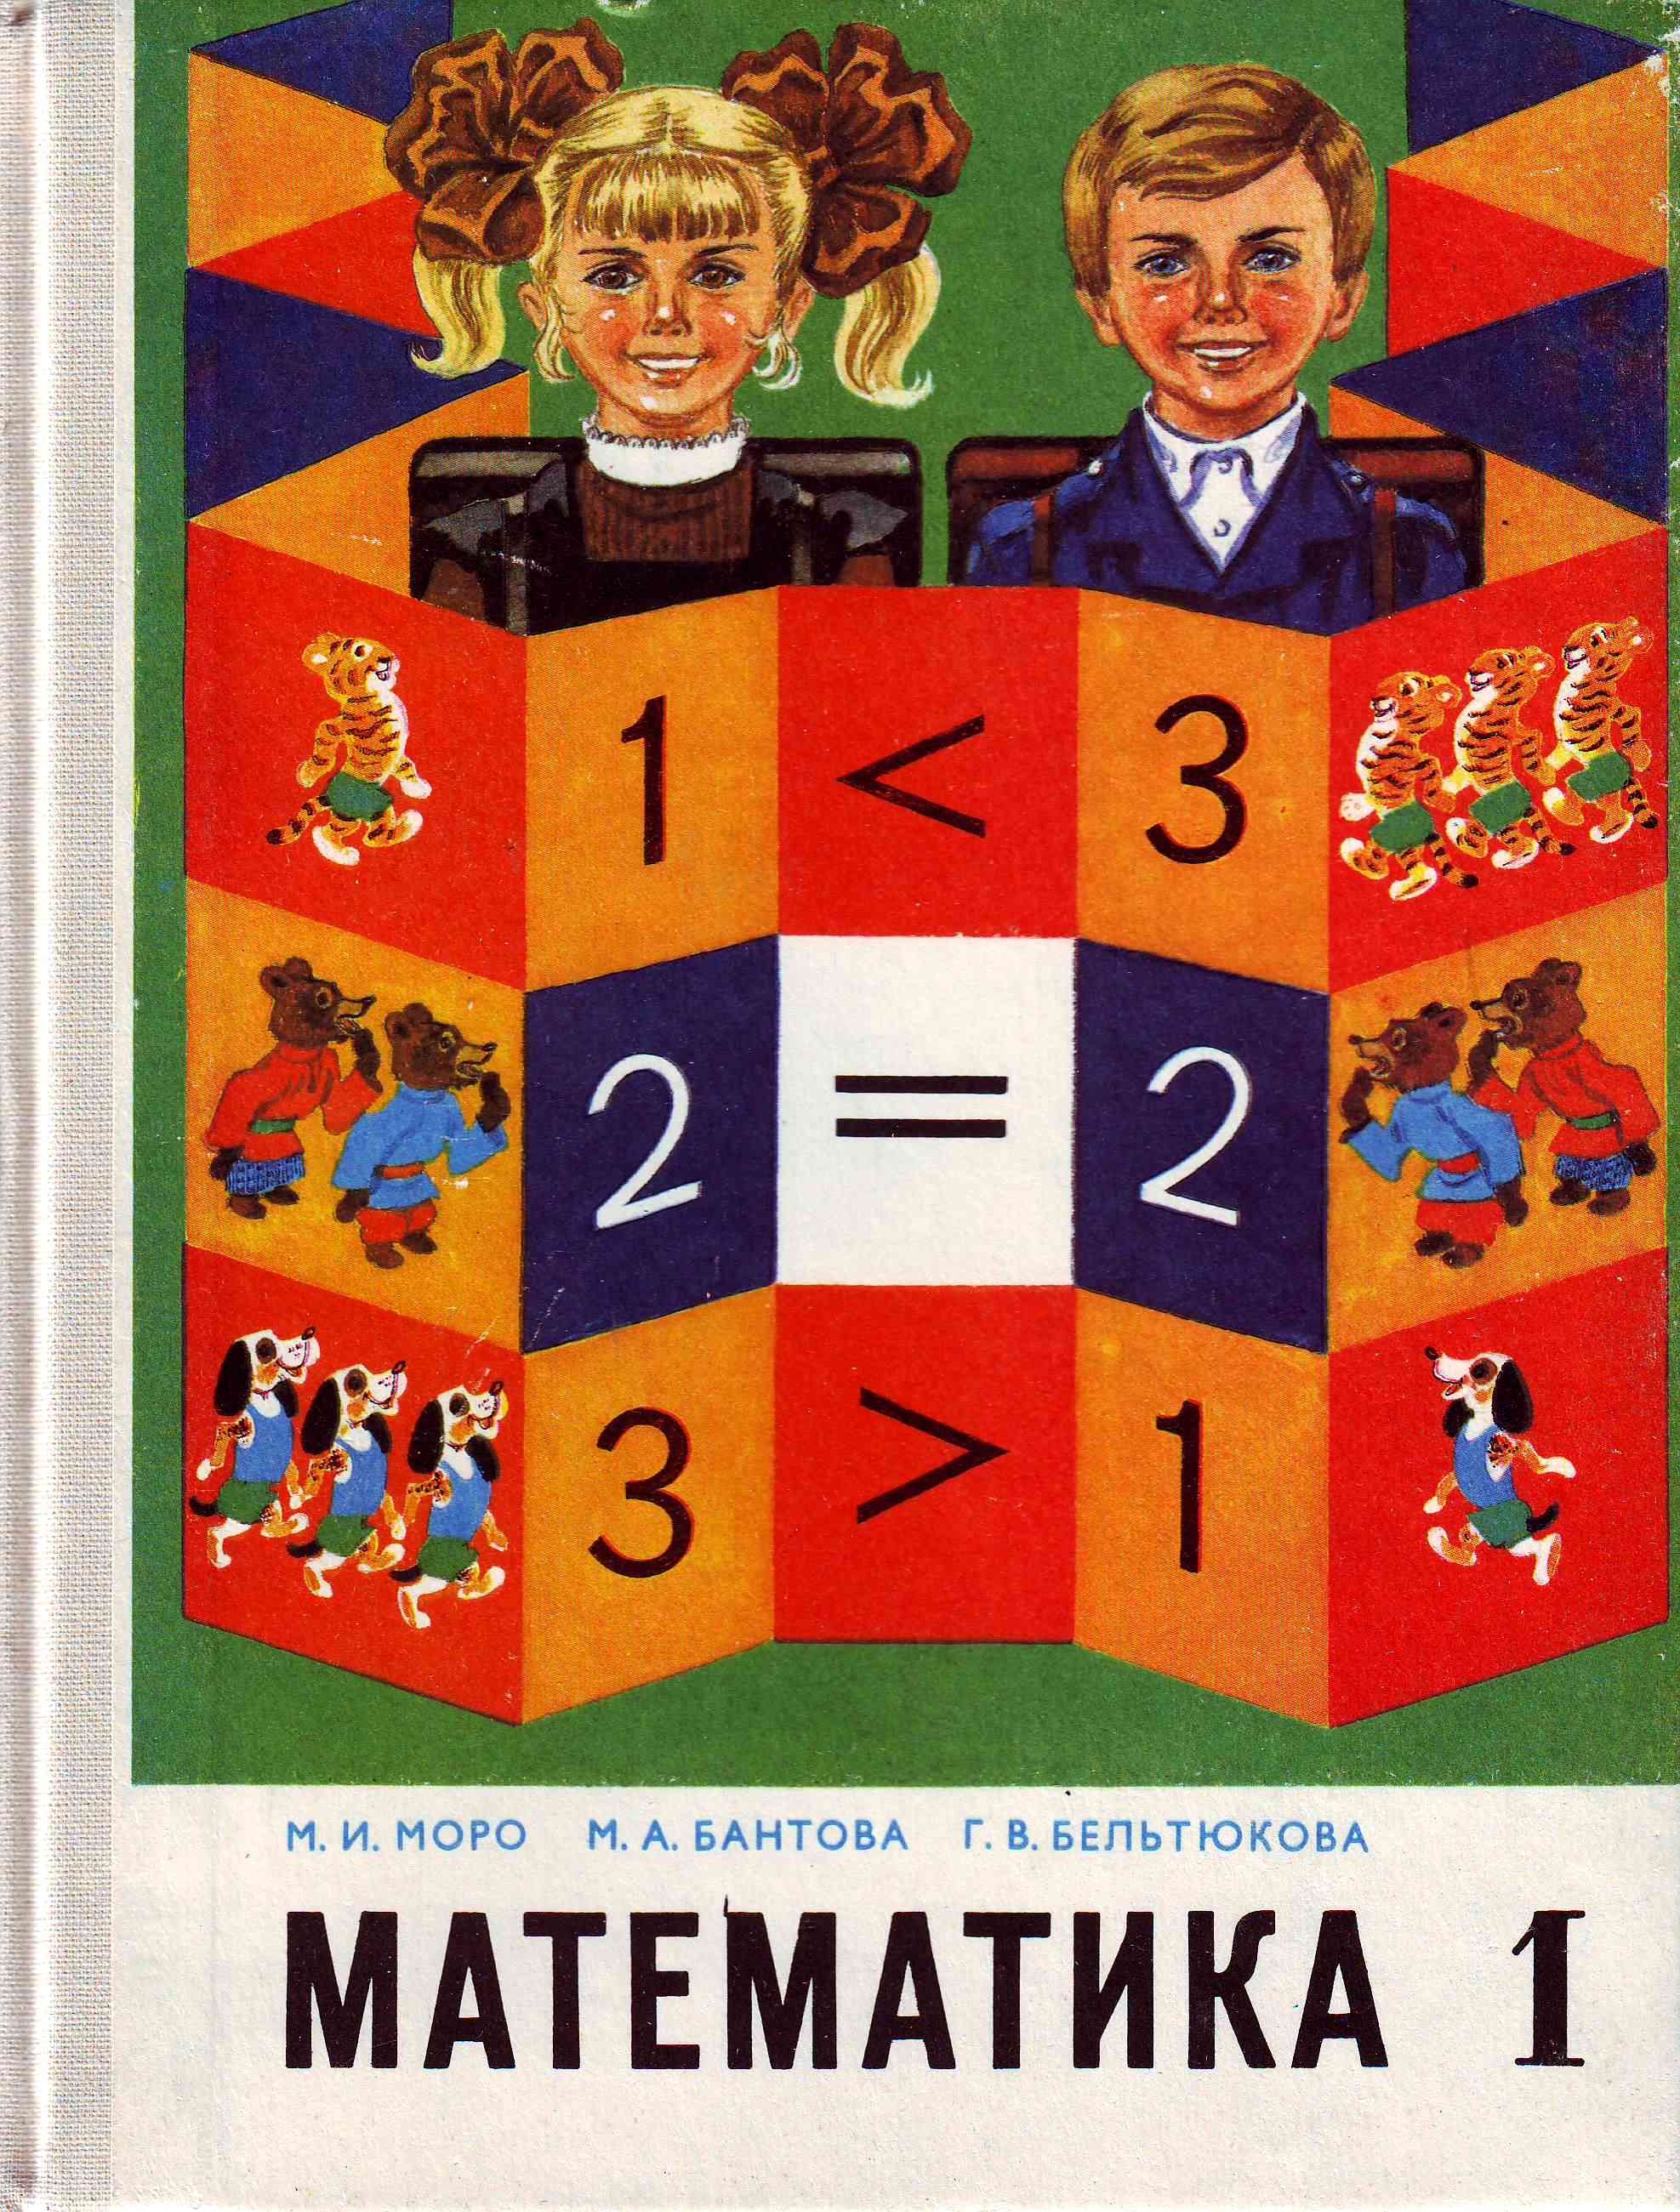 Первое знакомство 1 класс. Математика 1 Советский учебник Моро. Советские книги по математике. Старые учебники по математике. Советские учебники математики.